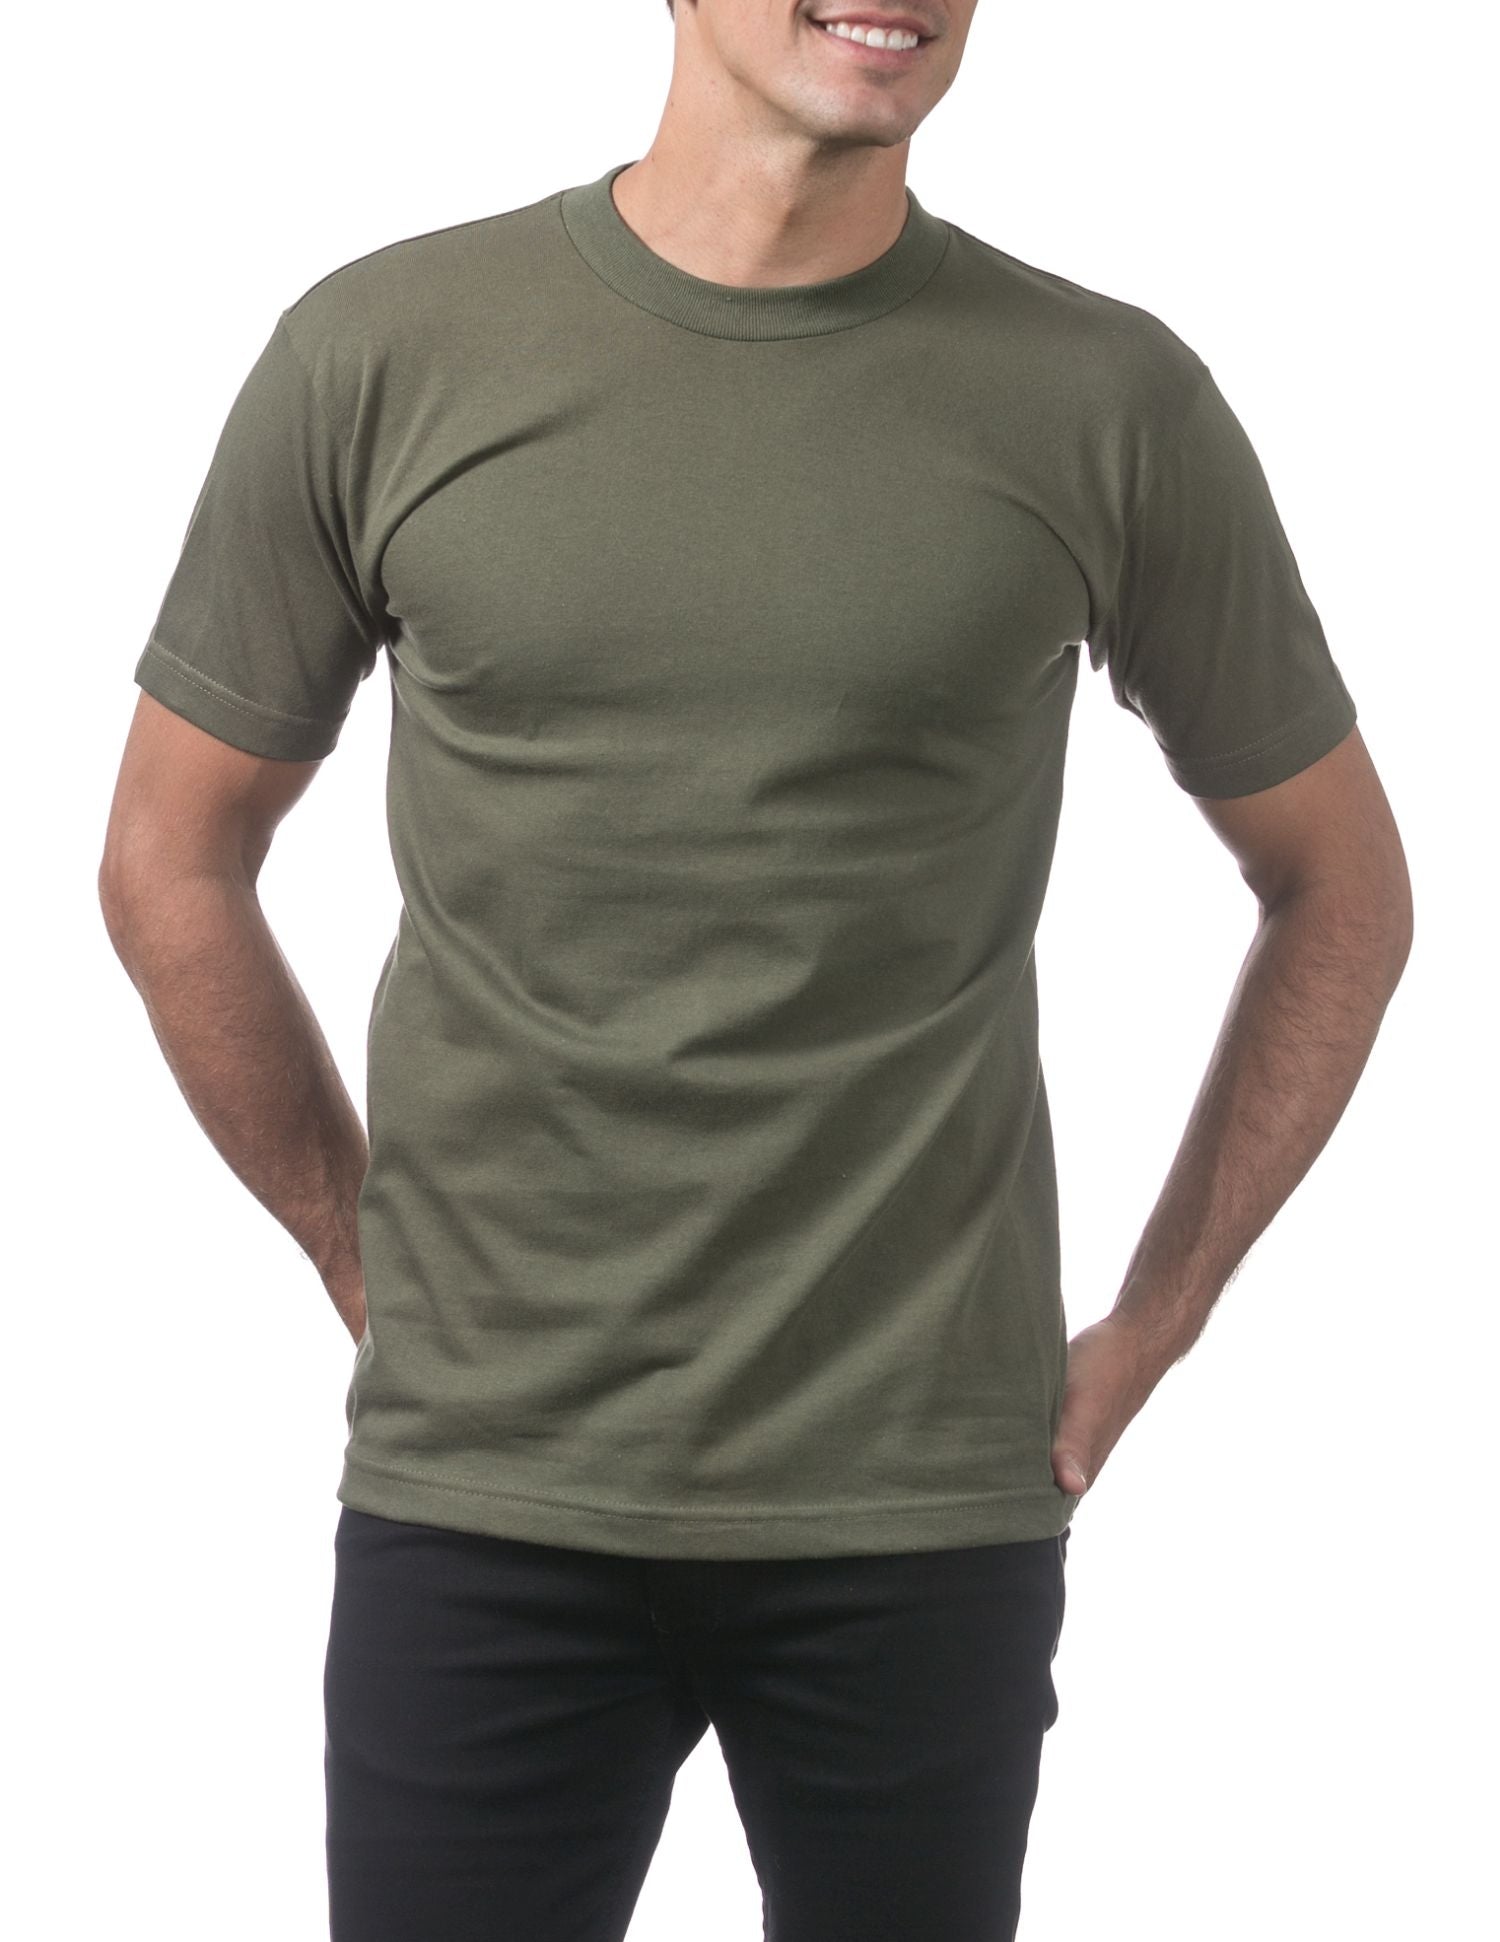 Pro Club Men's Comfort Cotton Short Sleeve T-Shirt - Olive Green - Large - Pro-Distributing